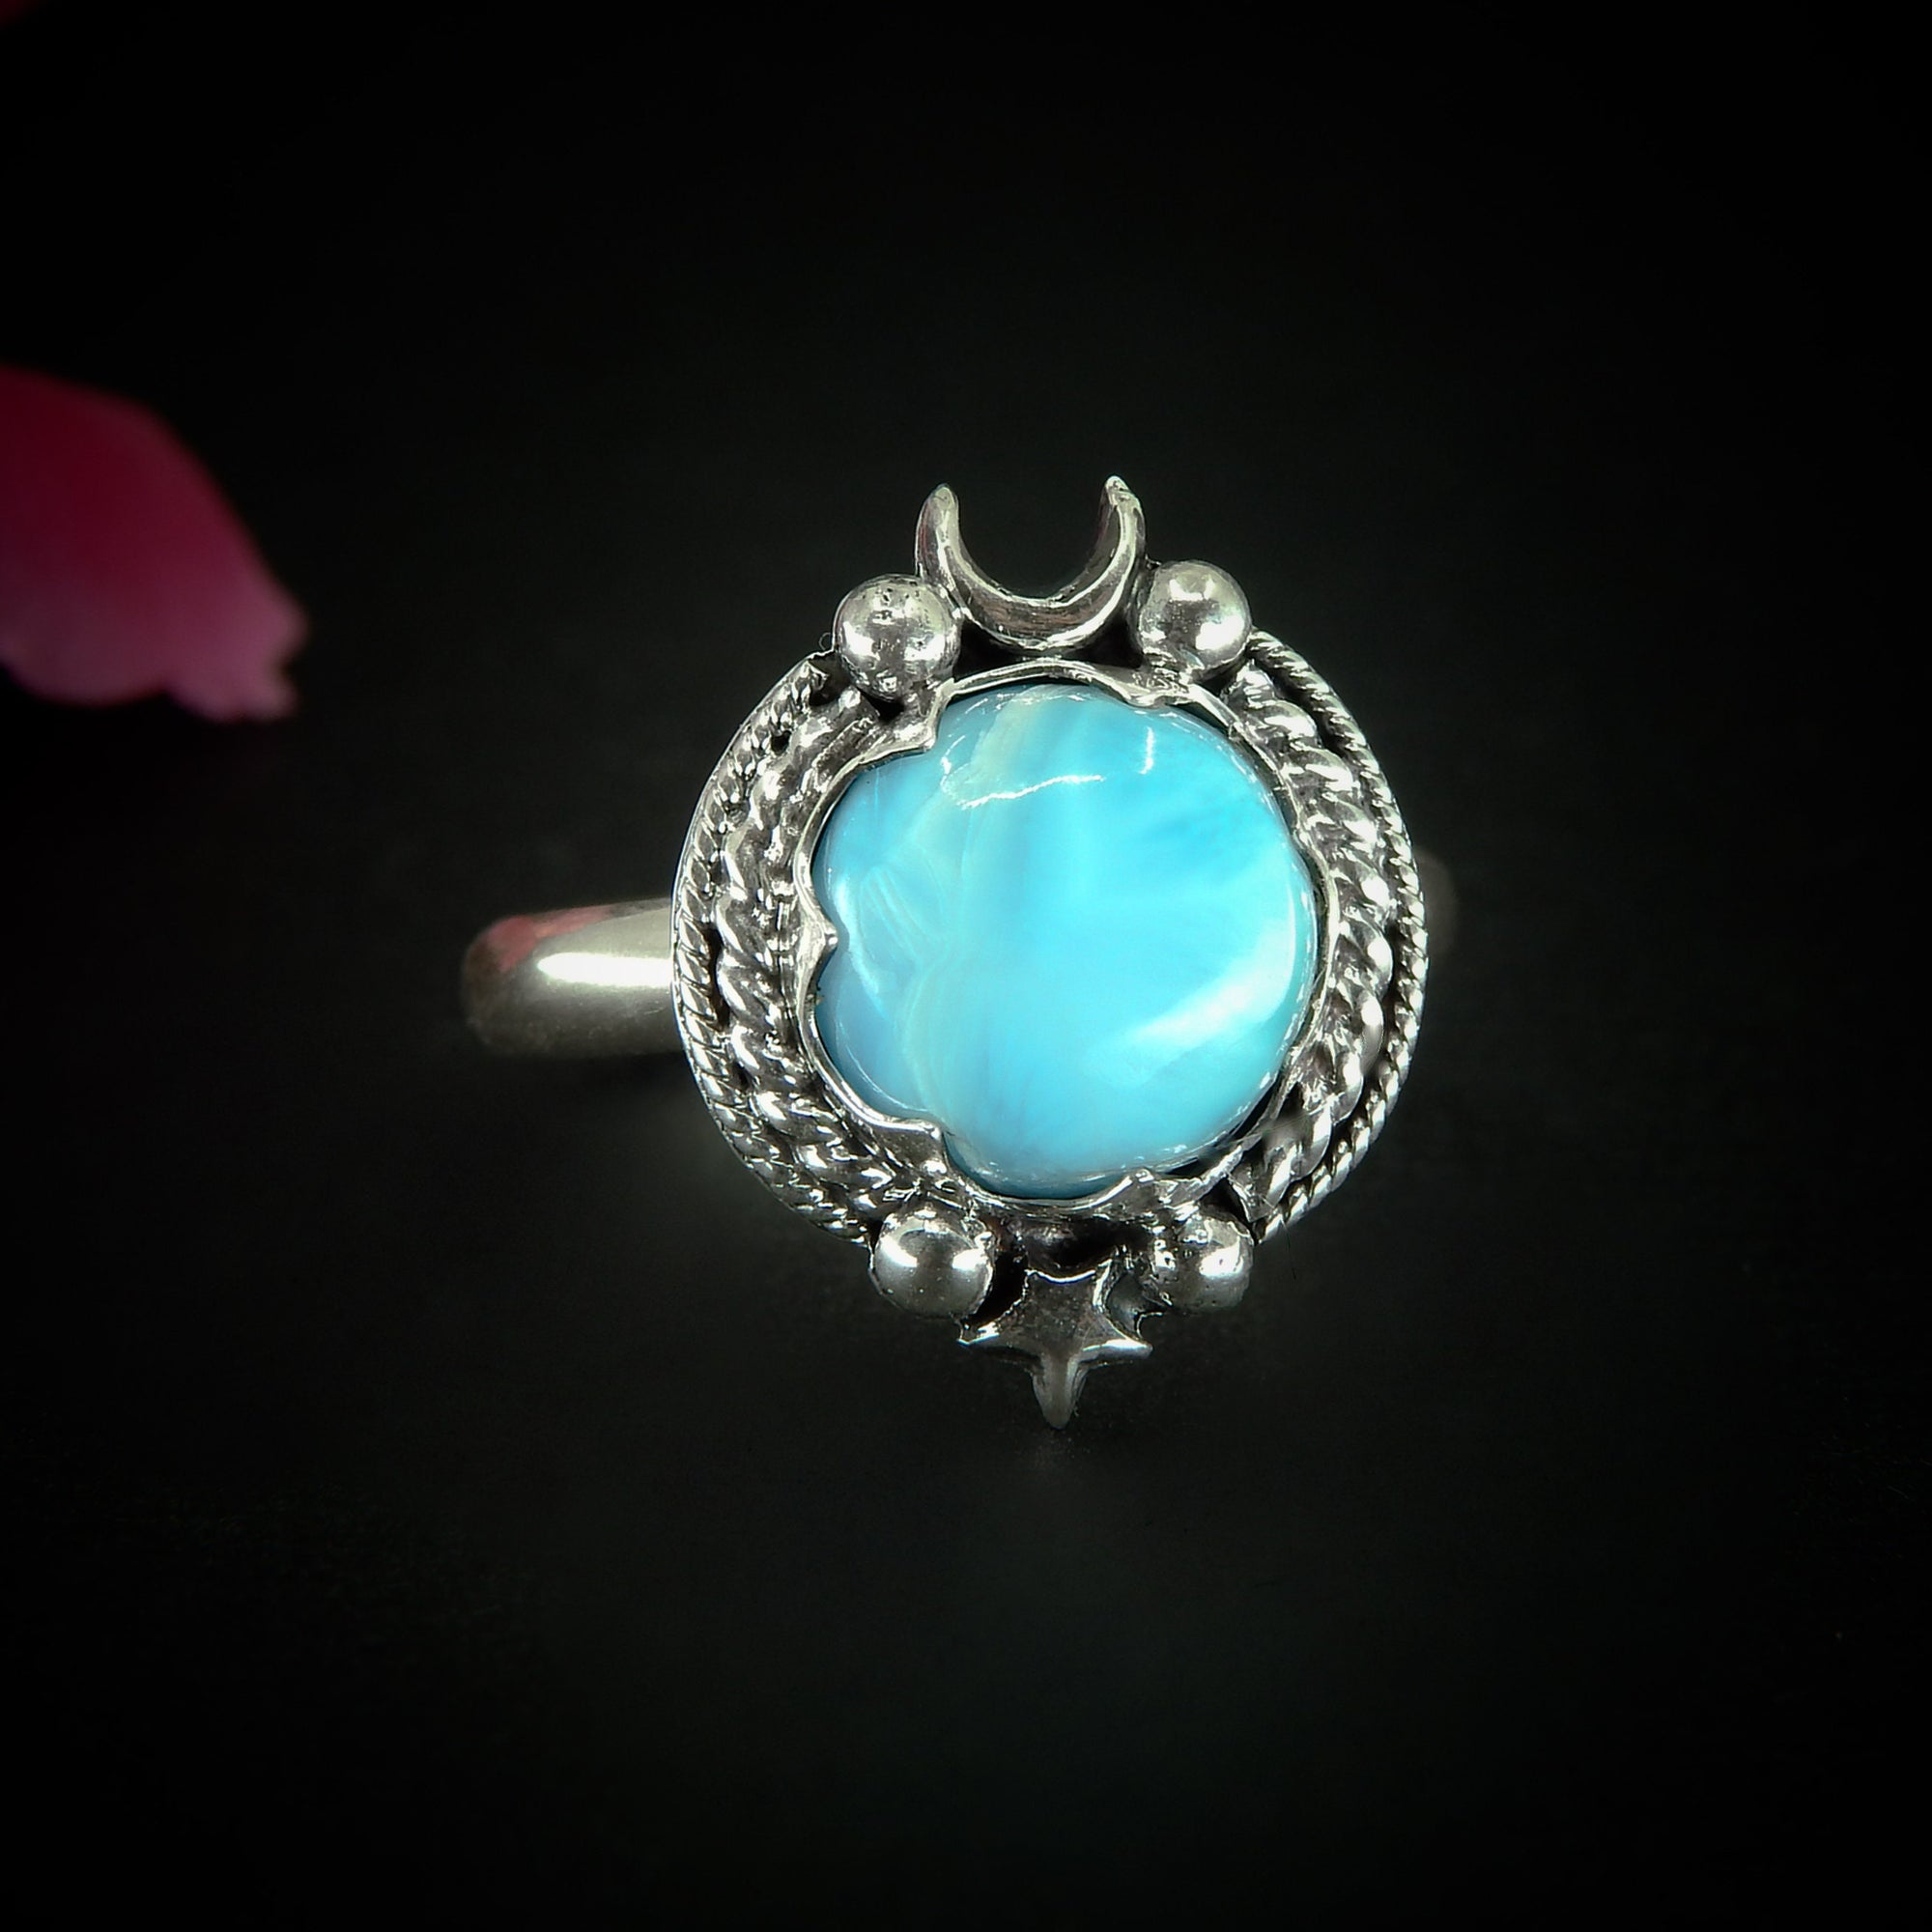 Larimar Ring - Size 9 to 9 1/4 - Sterling Silver - Blue Larimar Ring - Round Larimar Ring - Larimar Jewelry - Handcrafted Larimar Moon Ring